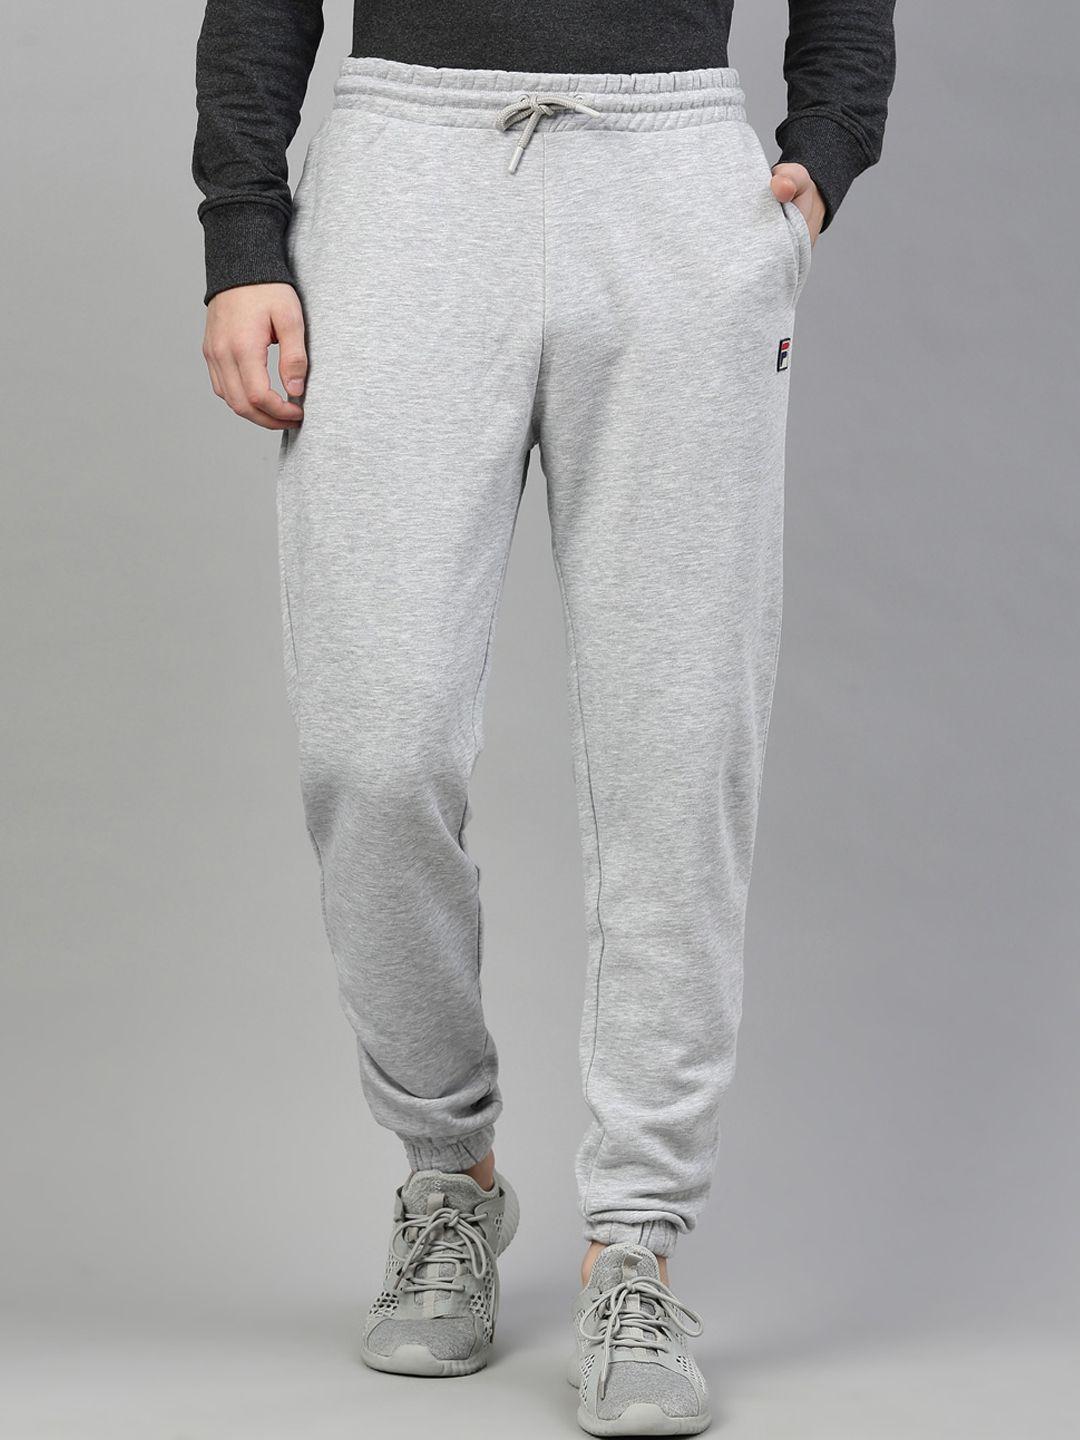 fila-men-grey-solid-cotton-track-pants